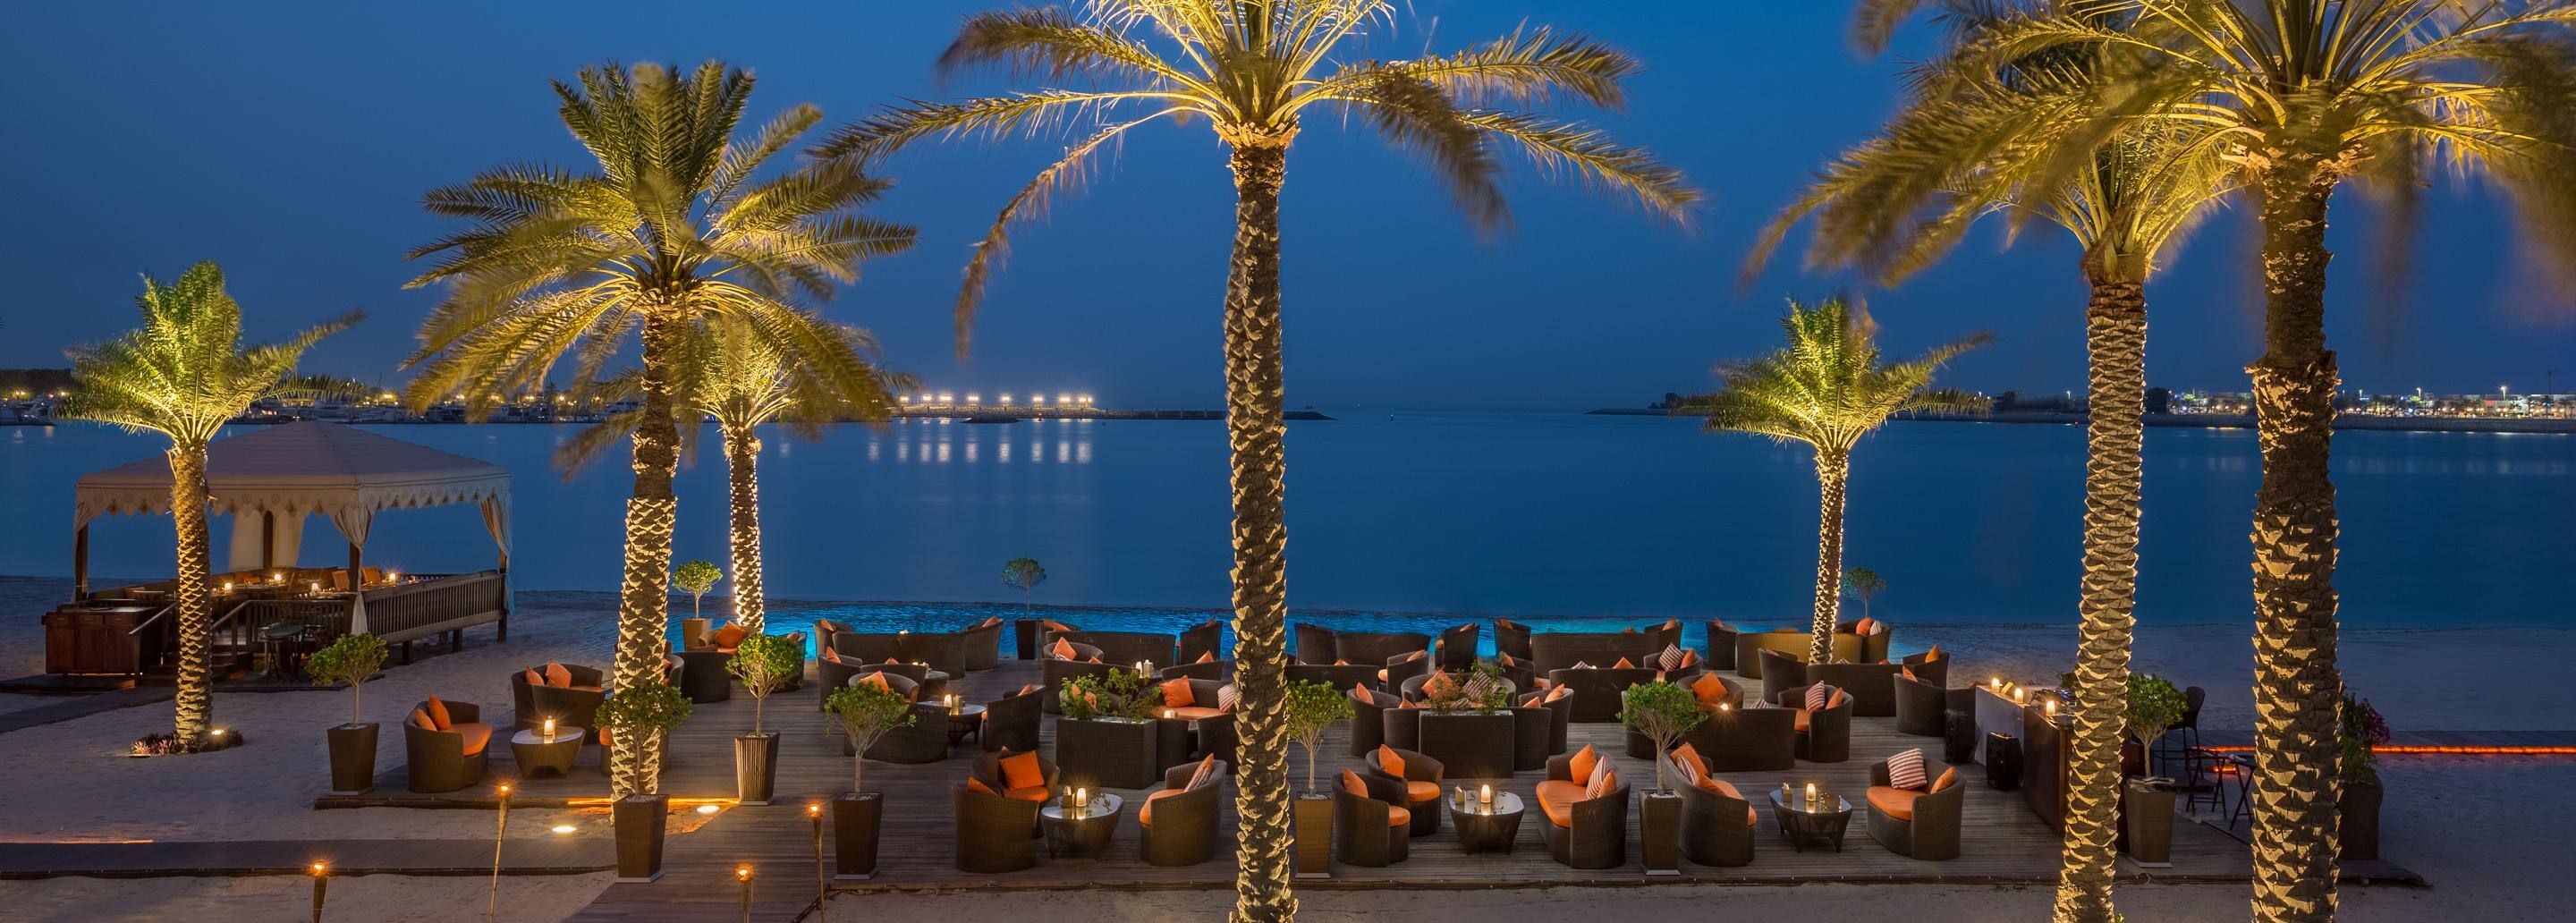 Event-Catering | Emirates Palace, Abu Dhabi